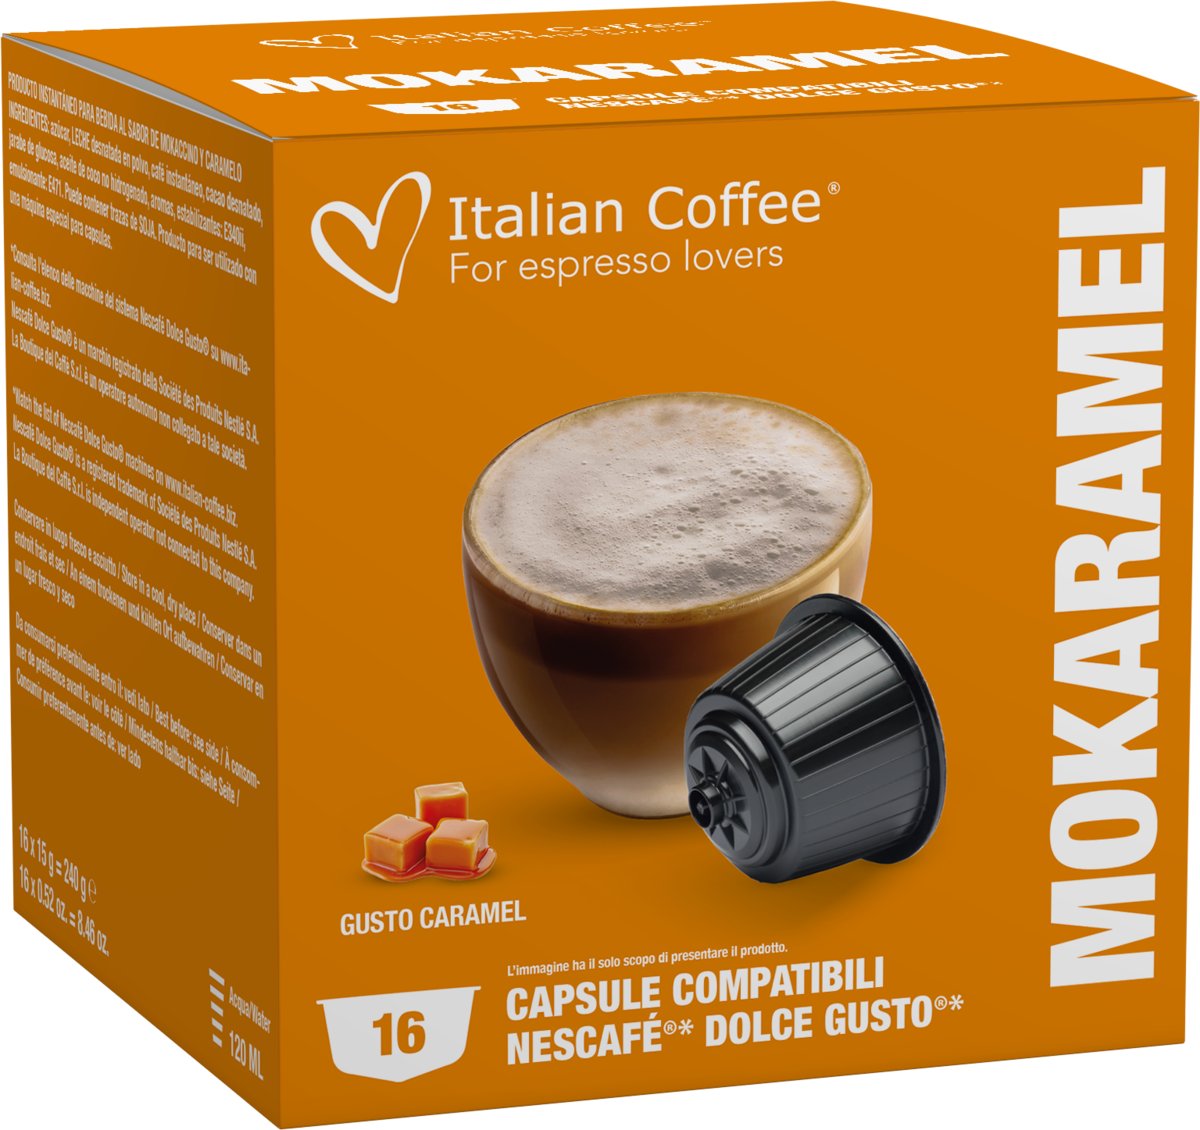 Italian Coffee Mokaramel 16 kapsułek do Dolce Gusto